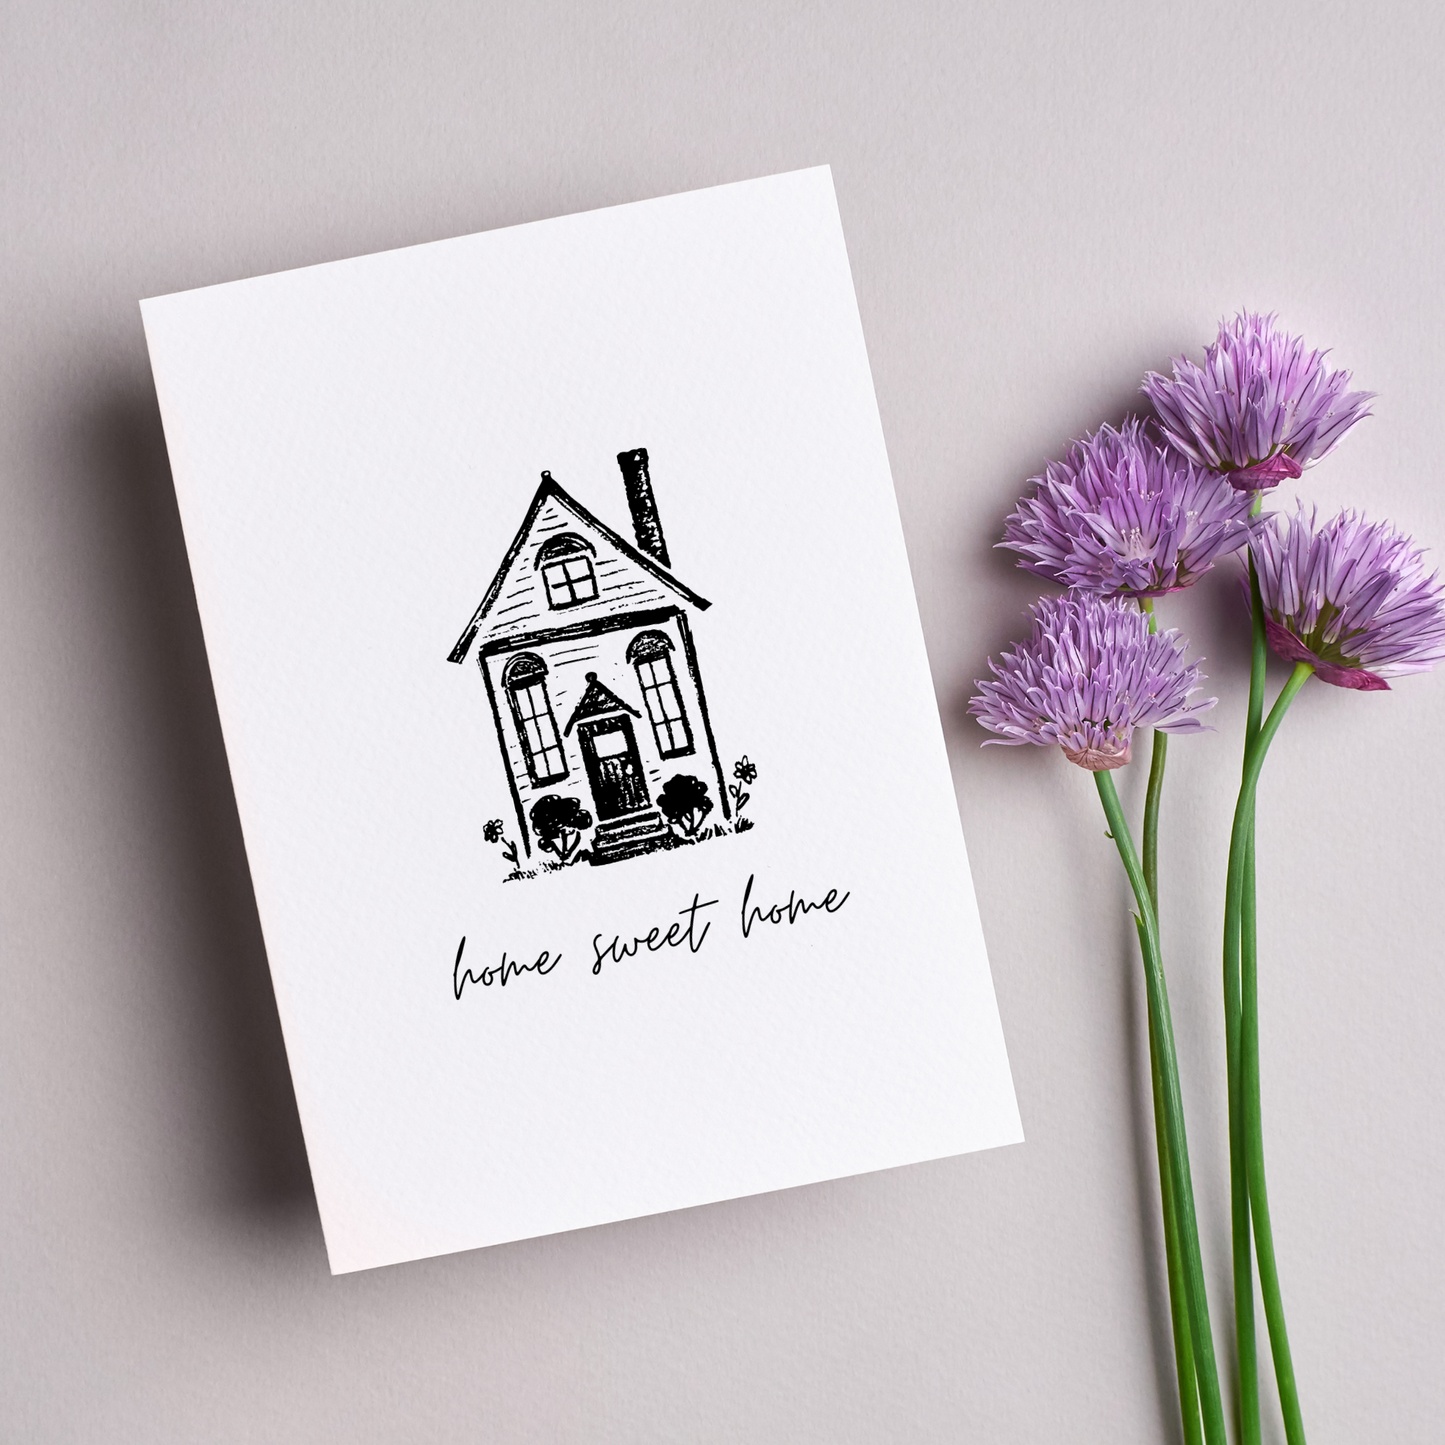 Home Sweet Home | Greeting Card